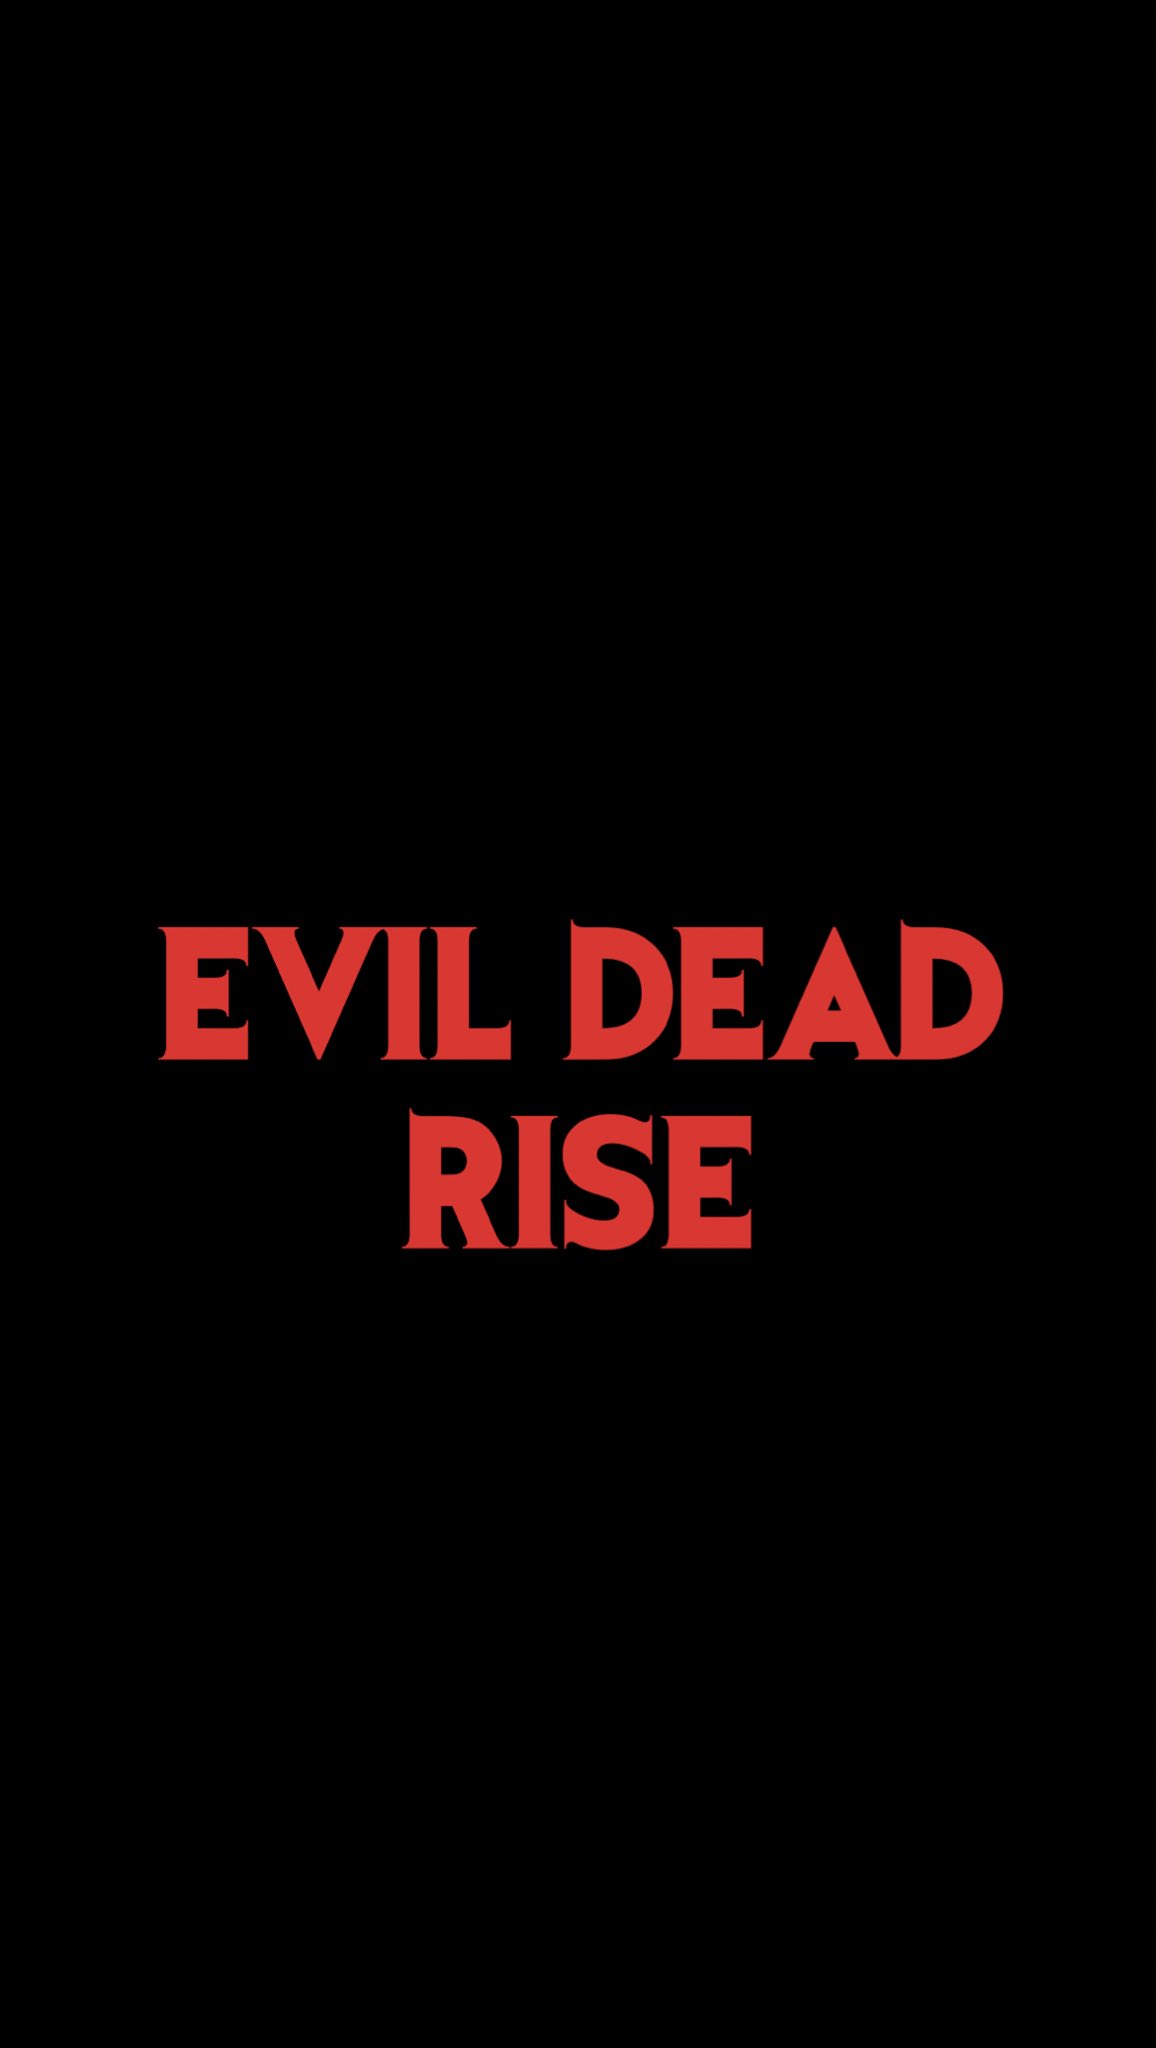 Evil Dead Rise wallpaper